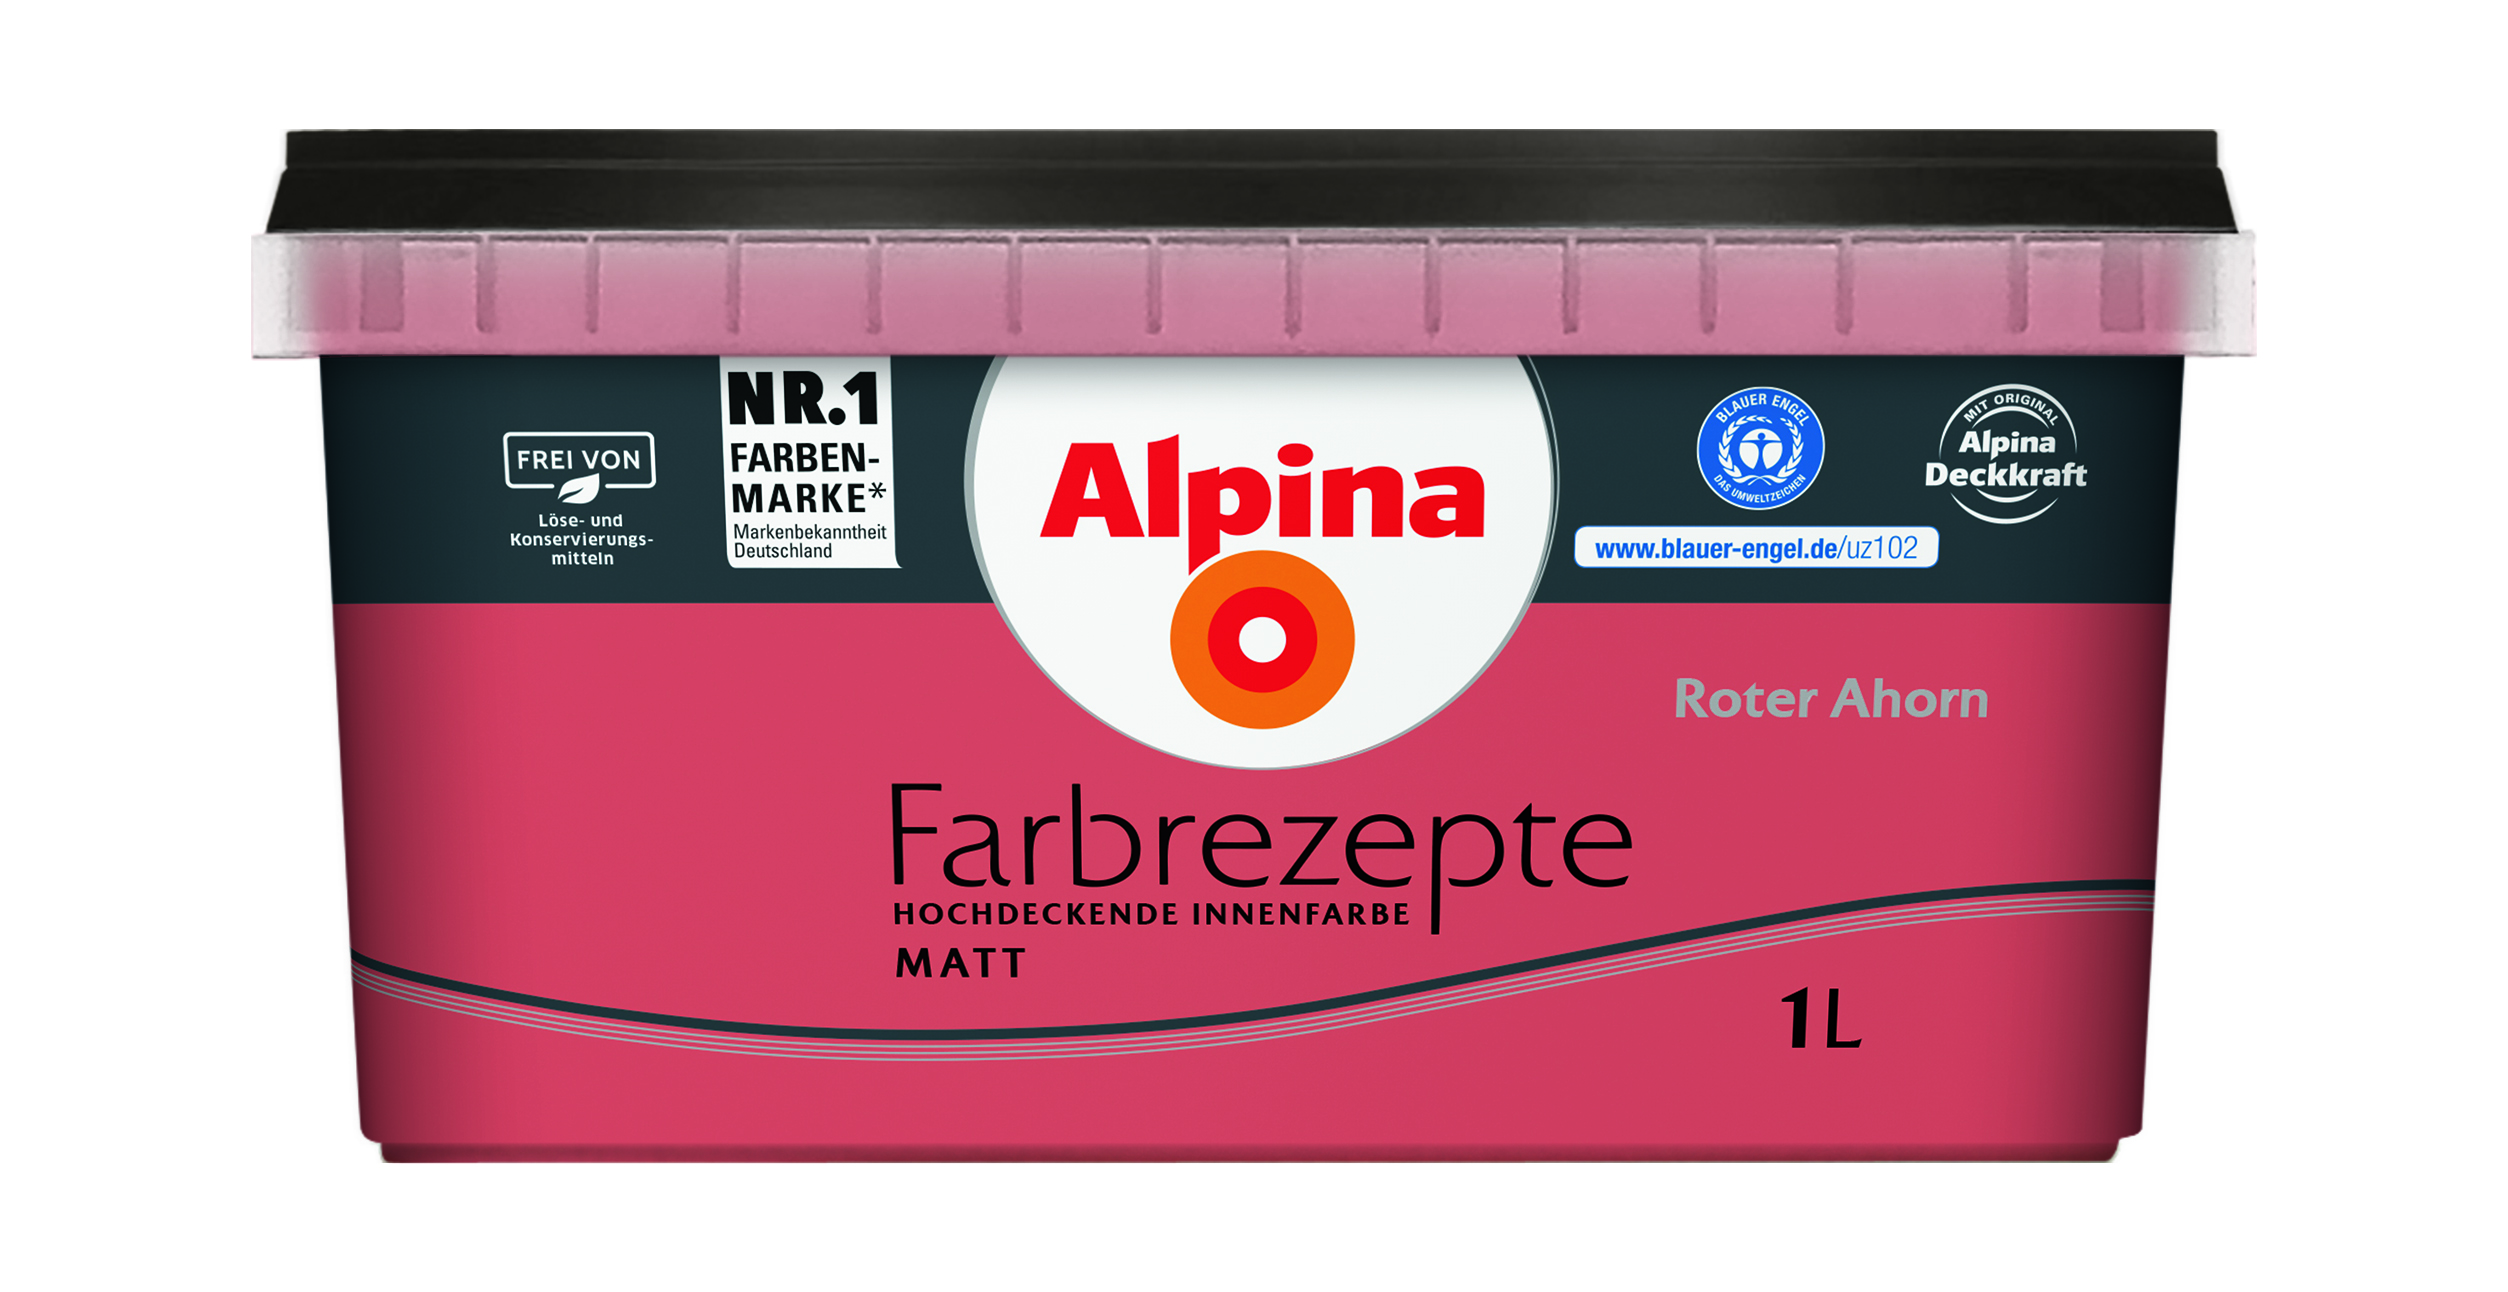 Alpina Farbrezepte Roter Ahorn, 1L